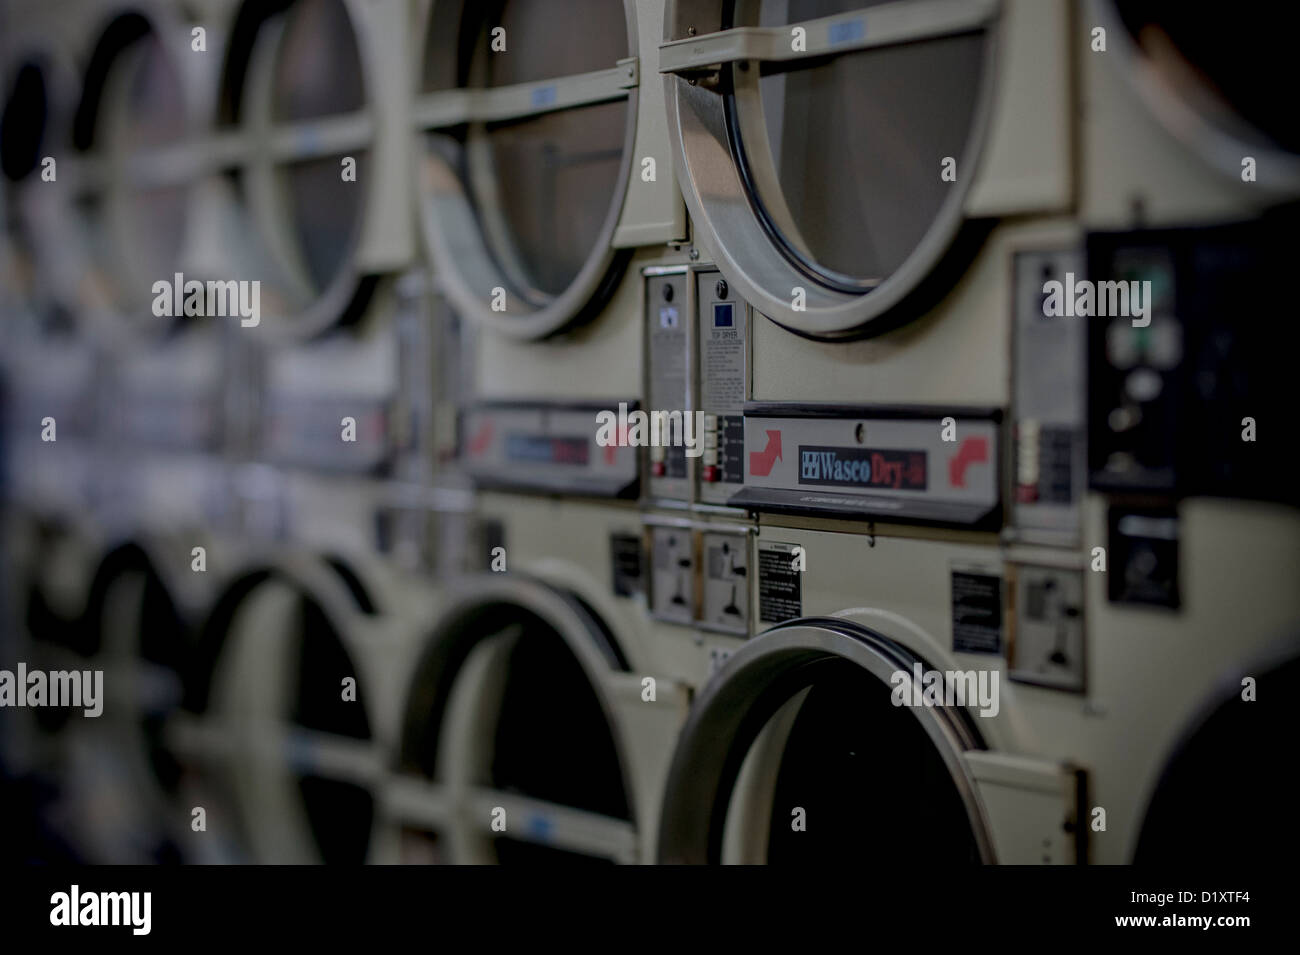 Laundromat machines Stock Photo